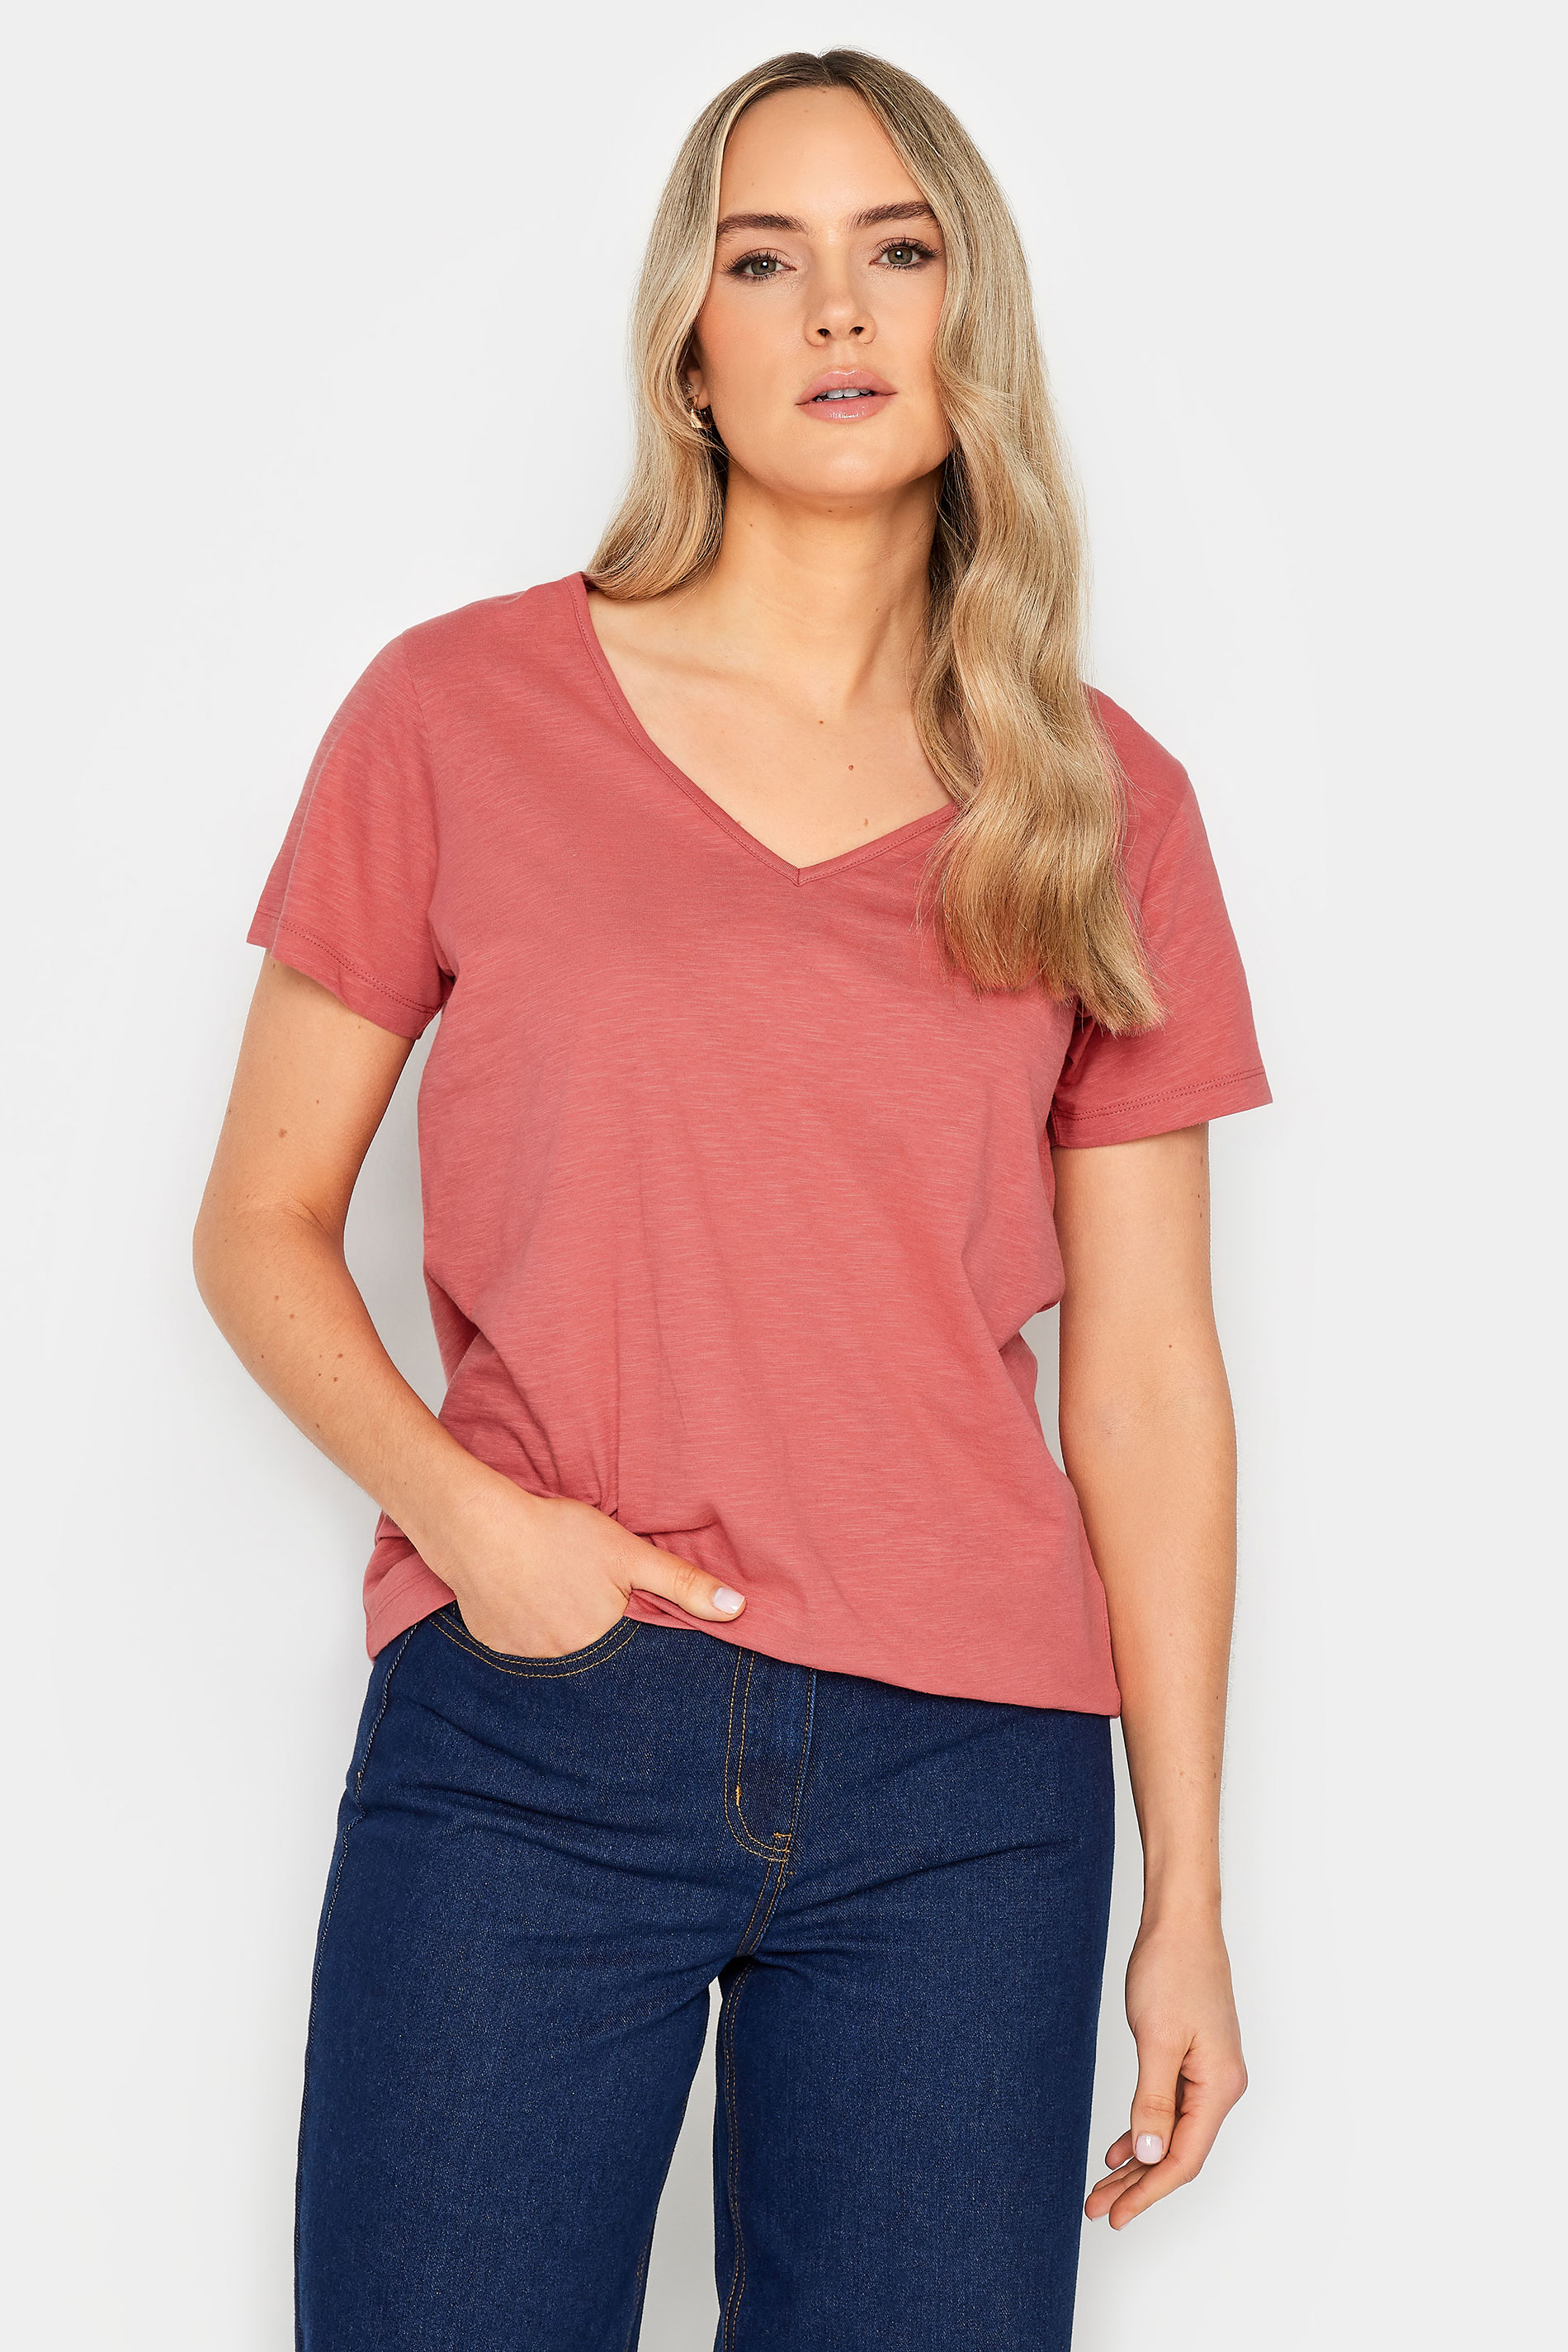 LTS Tall Womens 2 PACK Navy Blue & Coral Pink Stripe V-Neck T-Shirts | Long Tall Sally 3